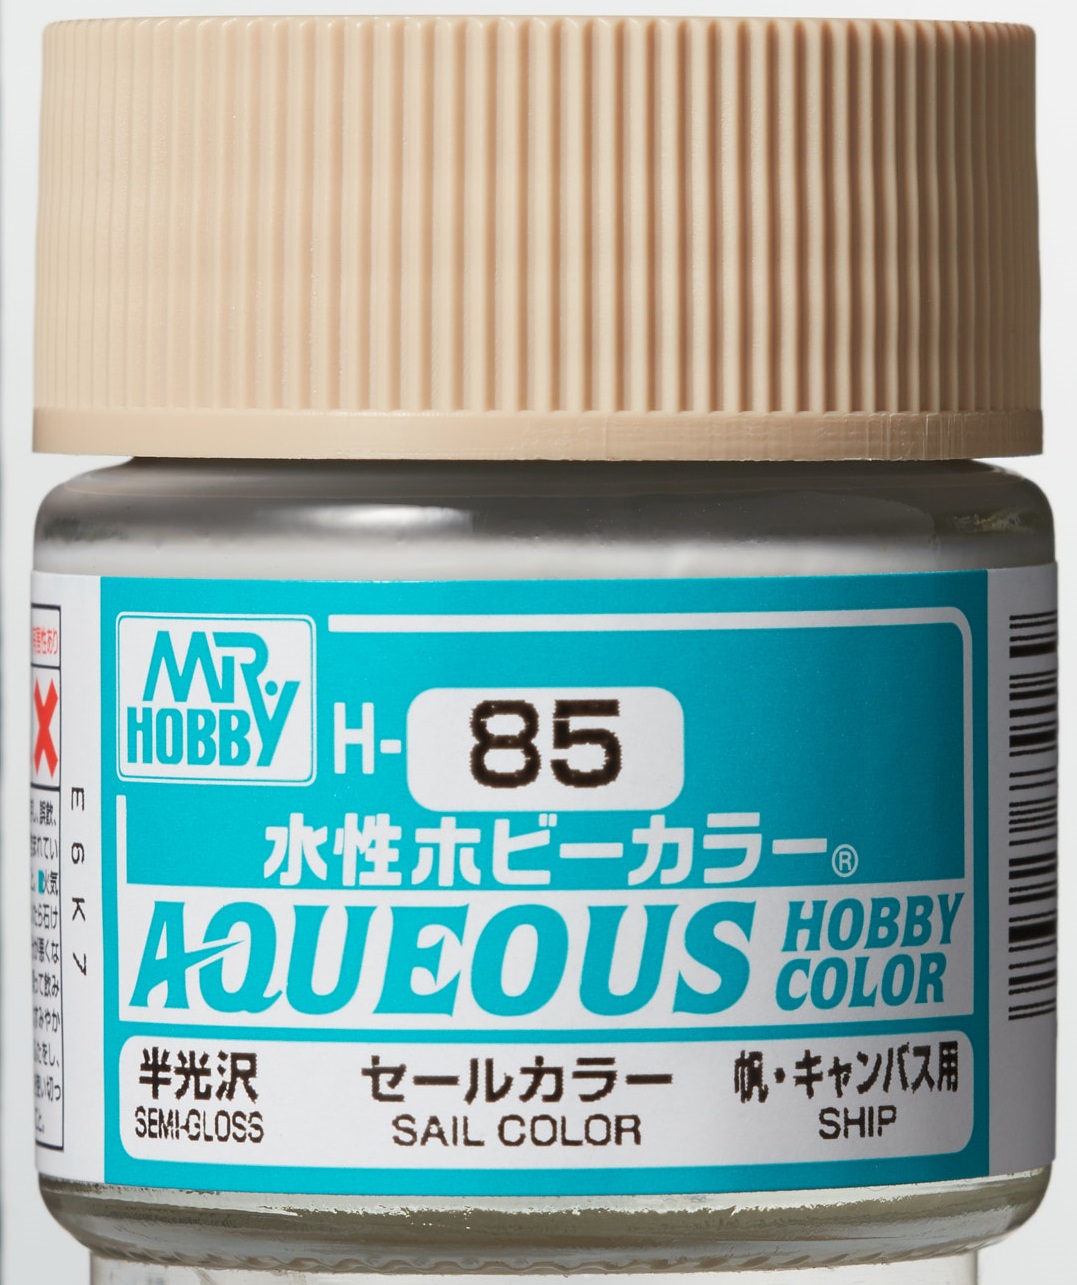 Mr. Aqueous Hobby Color - Sail Color - H85 - Segelfarbe